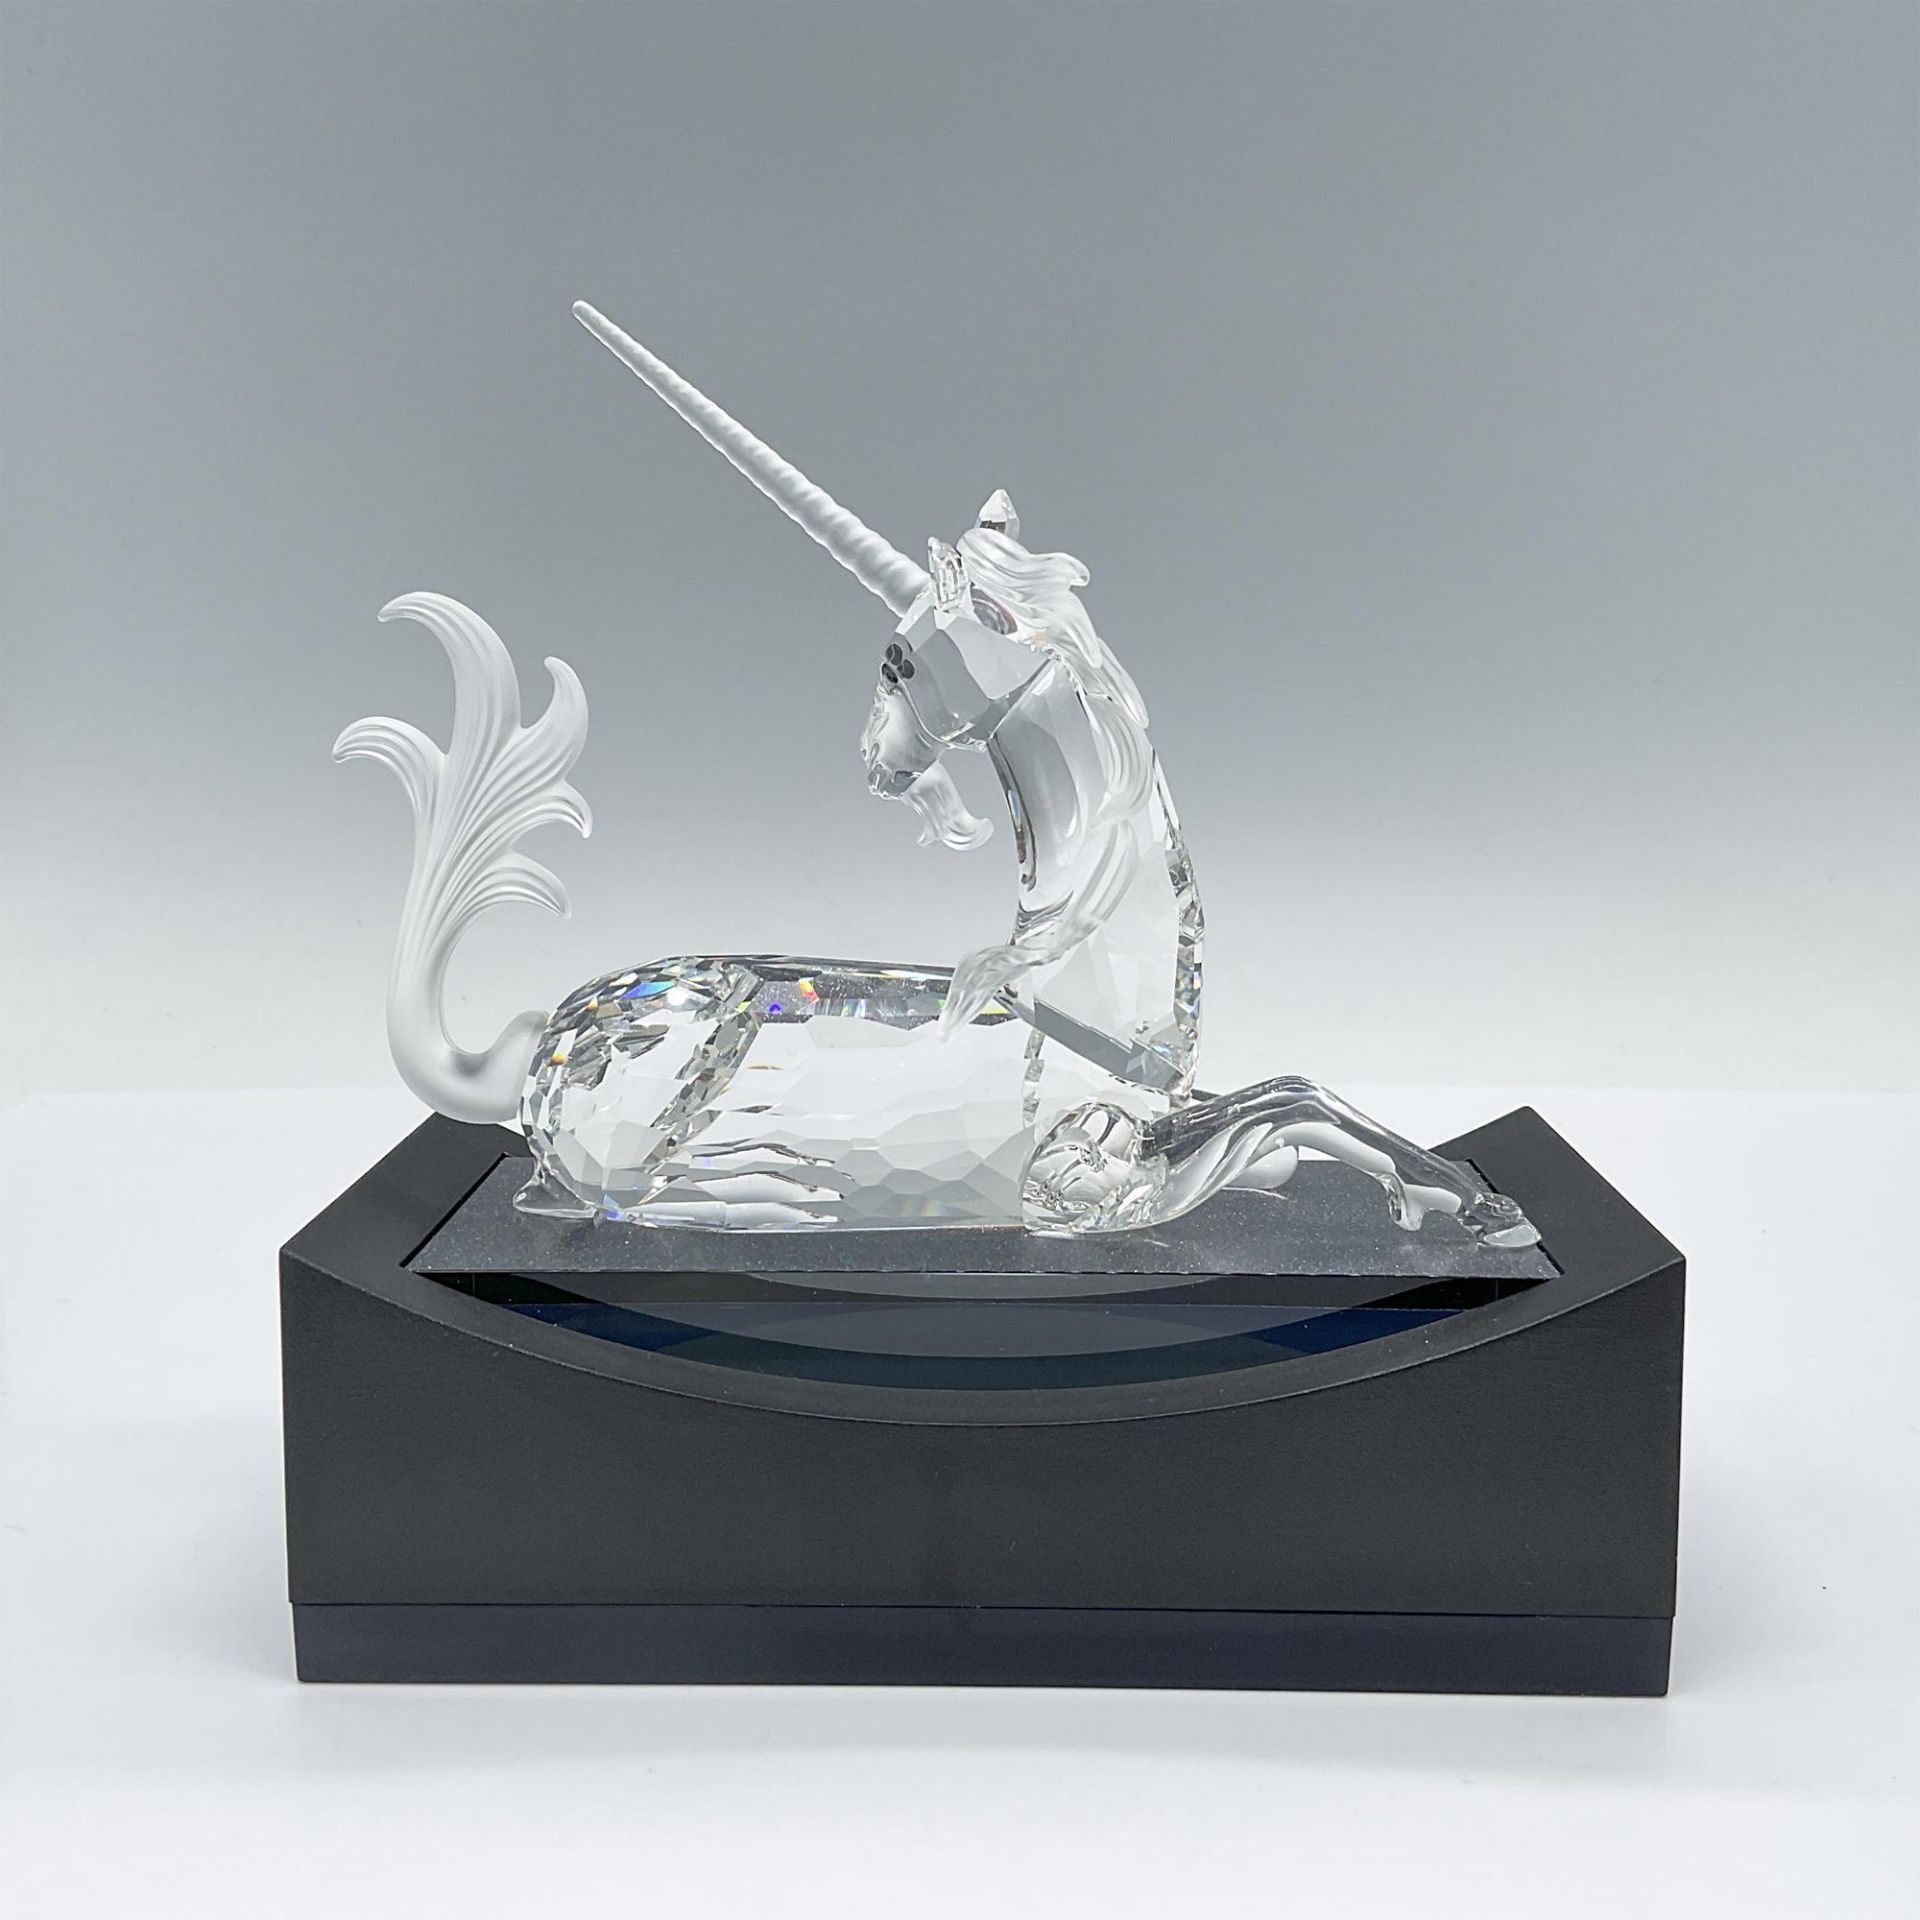 Swarovski SCS Crystal Figurine, Unicorn with Base - Image 2 of 4